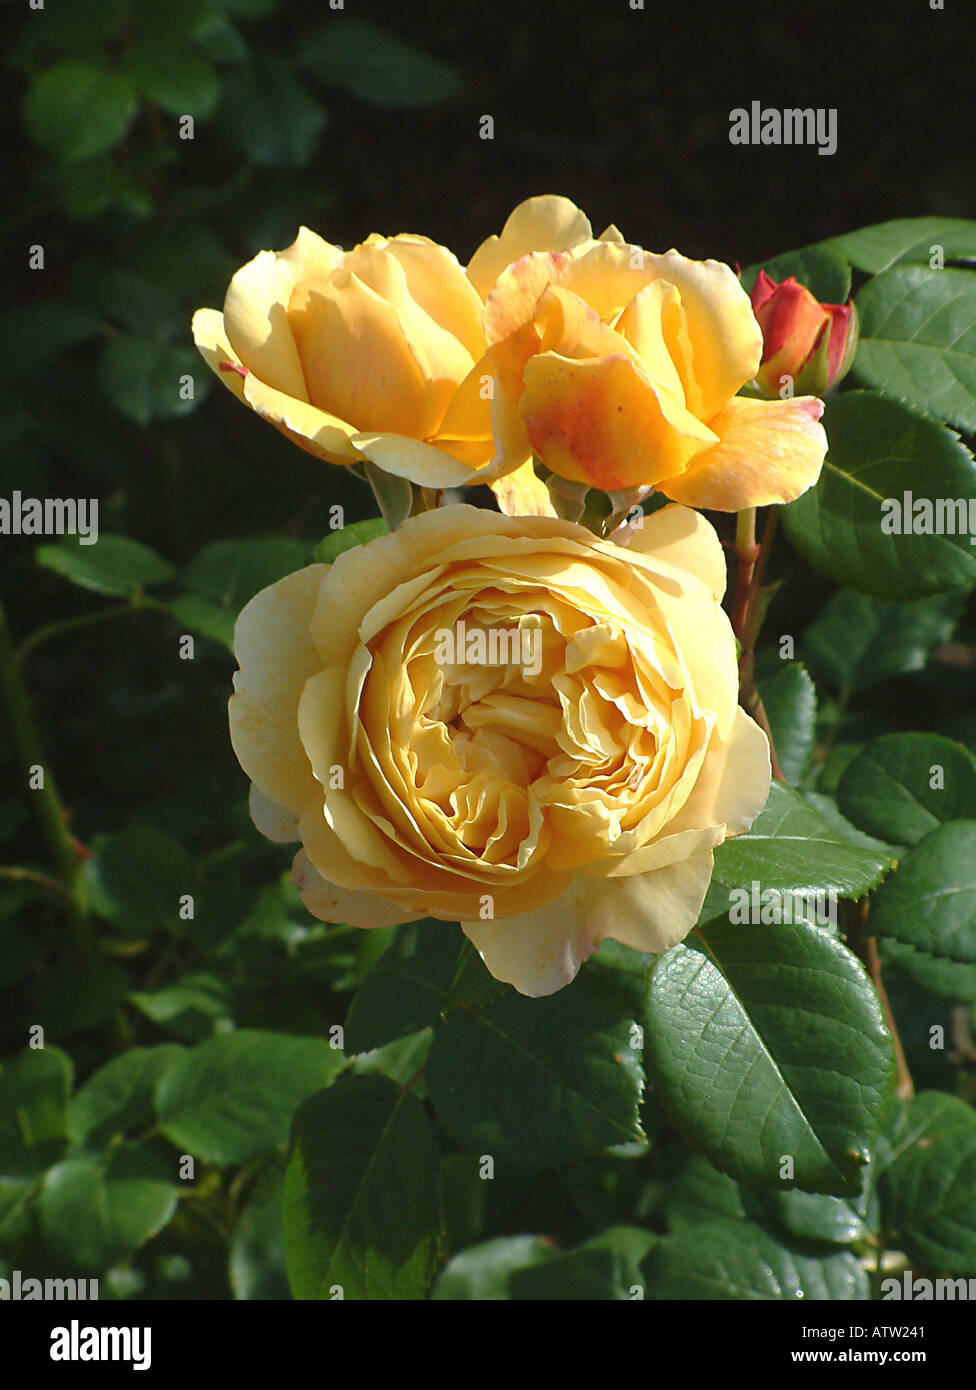 Yellow charles austin english david hi-res stock photography and images -  Alamy